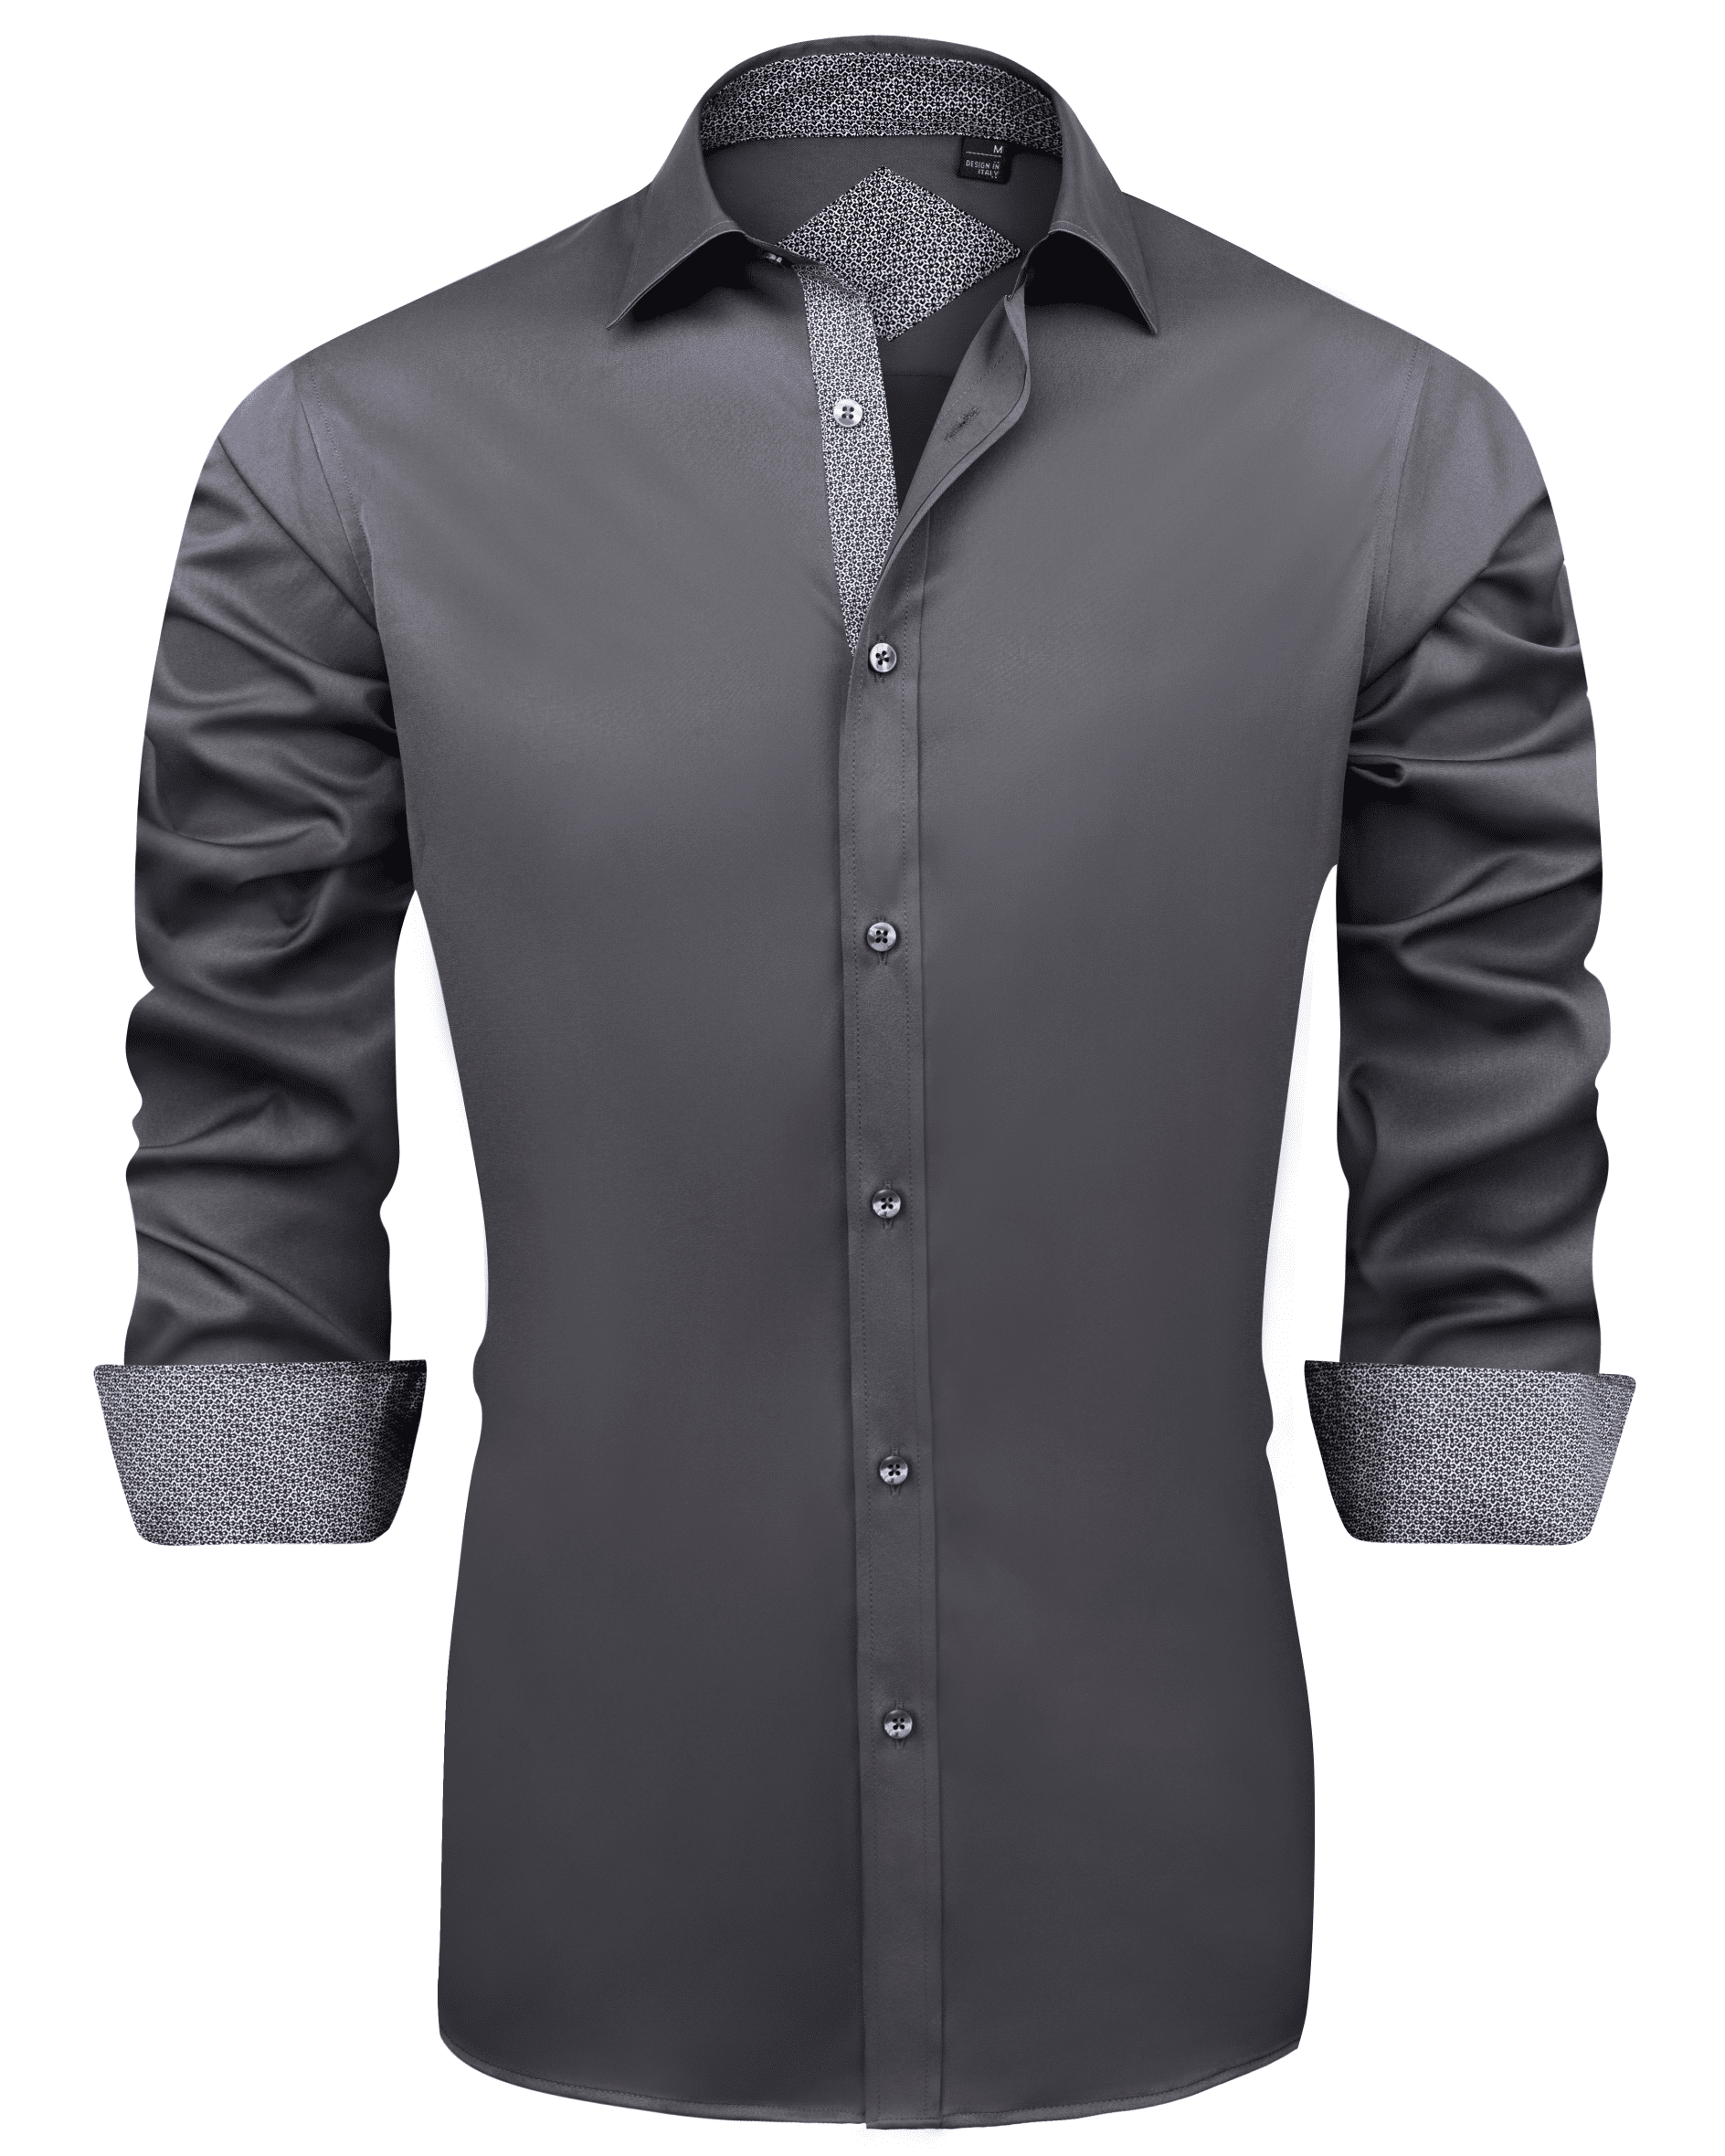 Alimens & Gentle Mens Long Sleeve Cotton Spandex Dress Shirt